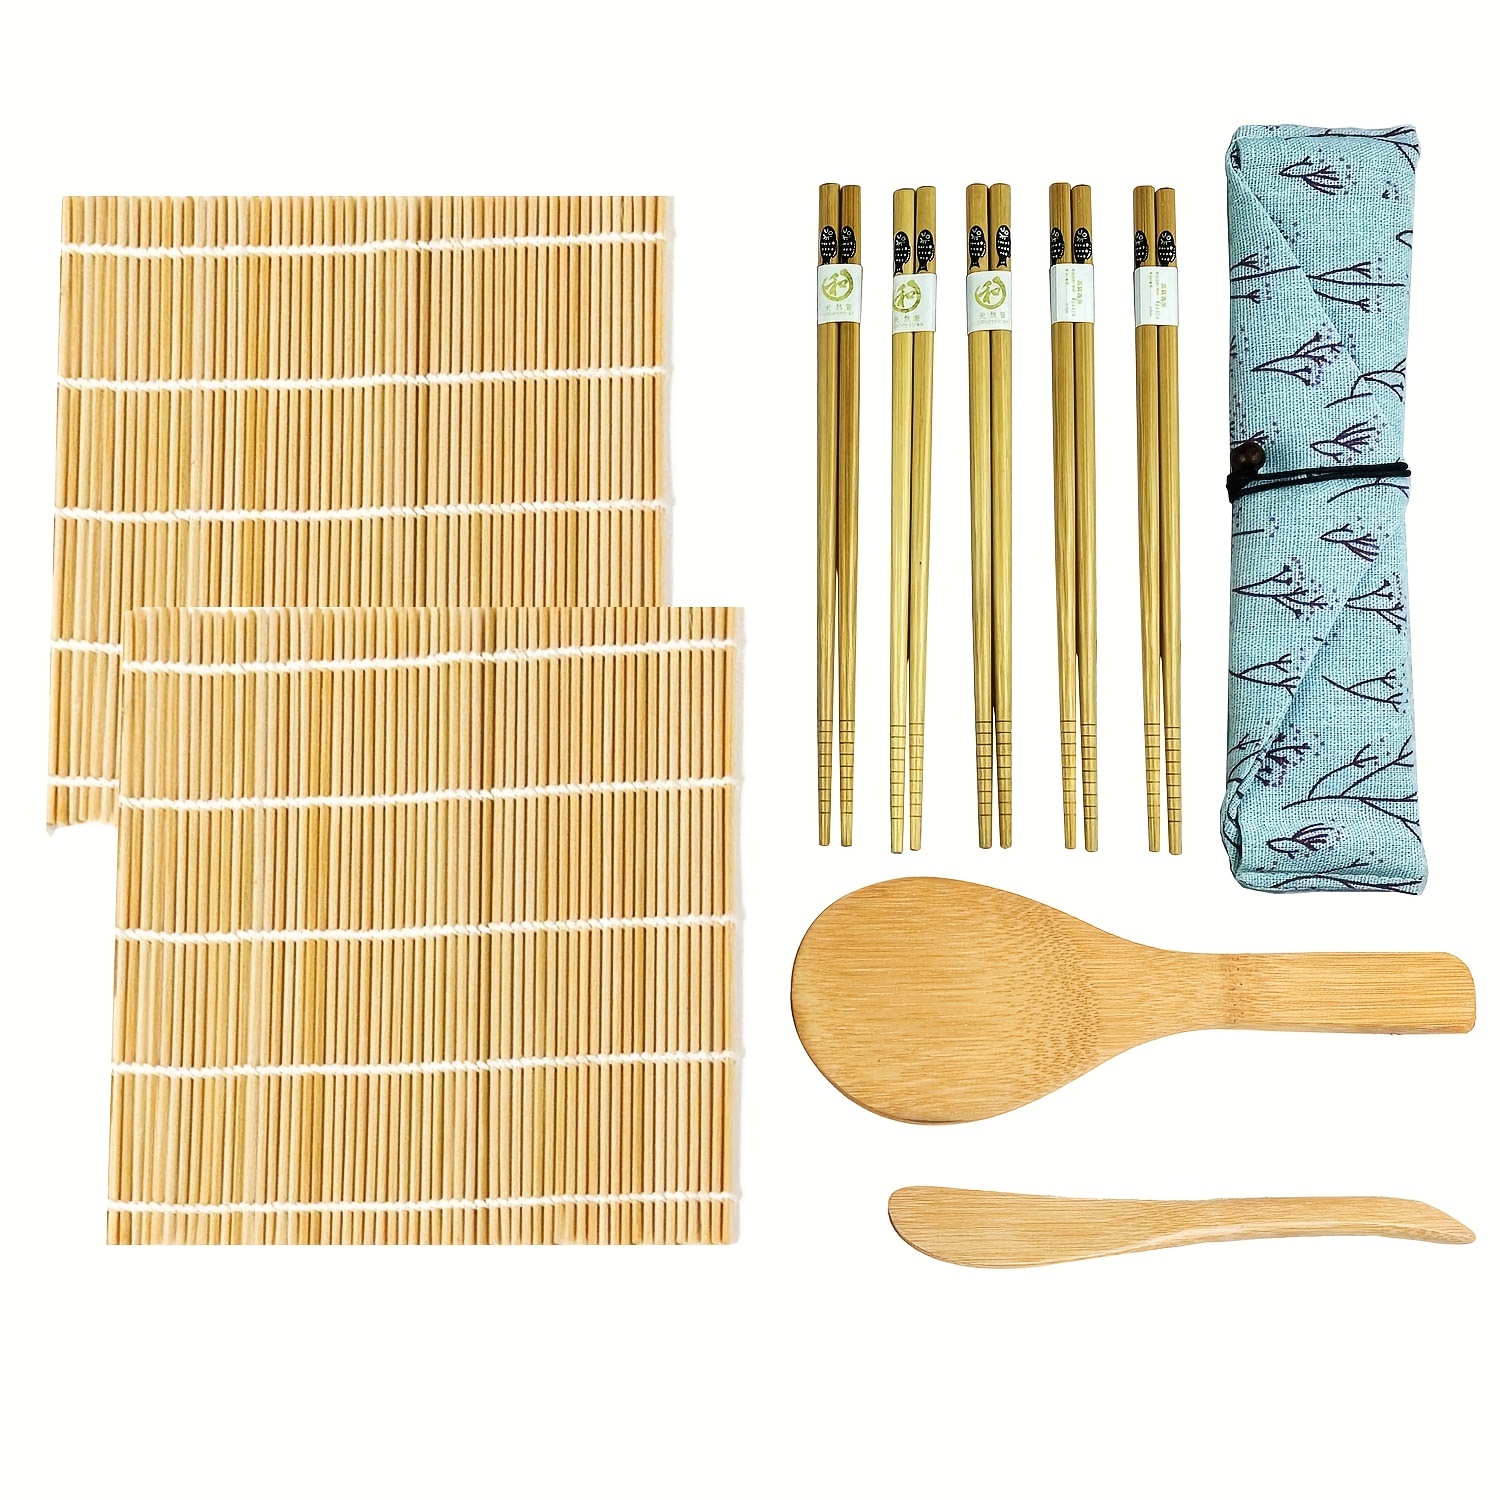 Bamboo Sushi Making Kit with 2 Rolling Mats - 5 Pairs Chopsticks - Rice Paddle